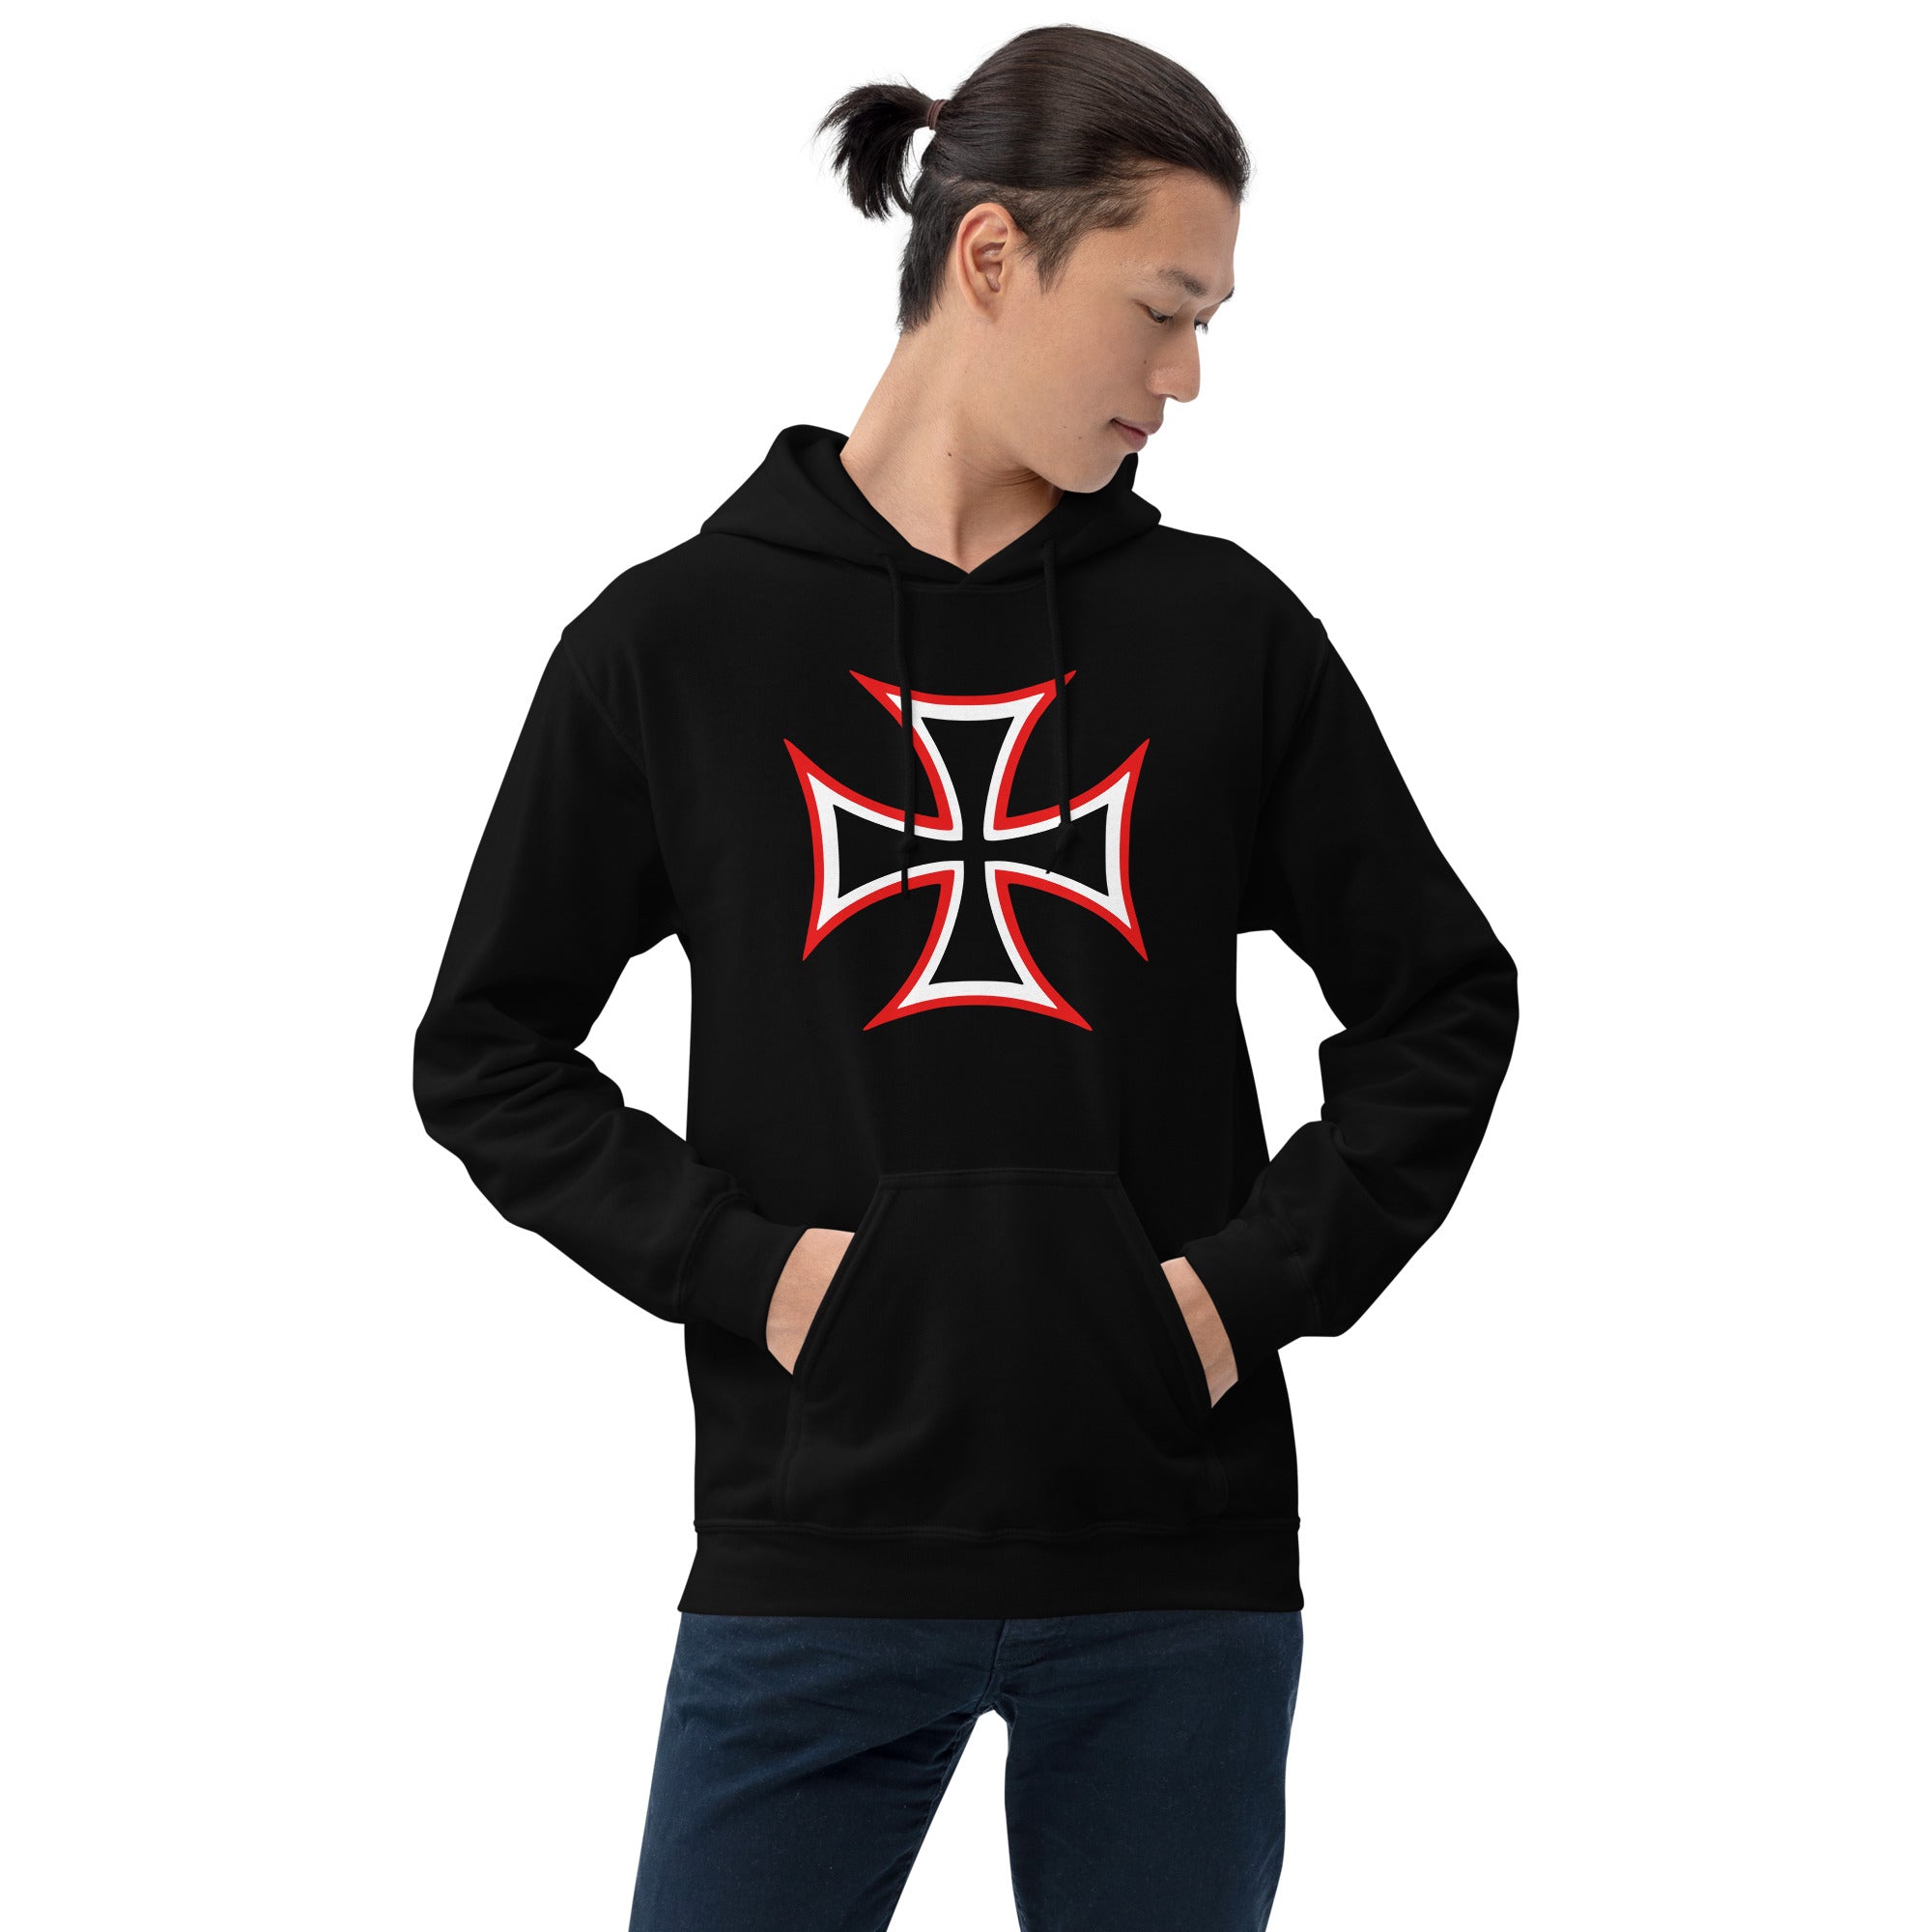 Red and White Occult Biker Cross Symbol Unisex Hoodie Sweatshirt